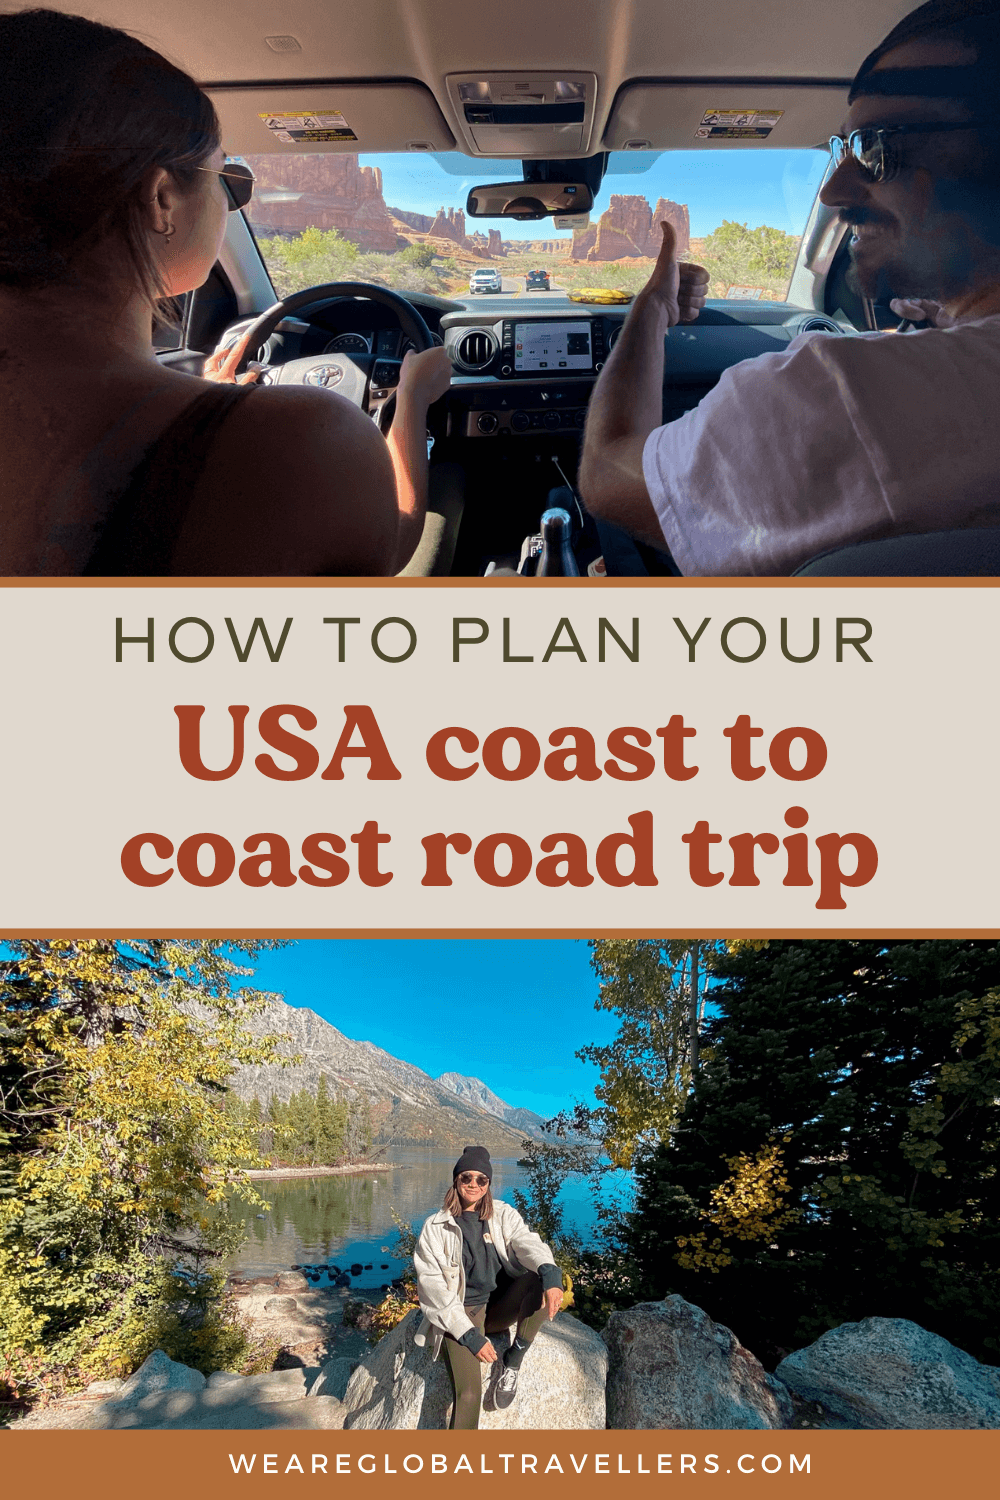 Top tips for a USA coast to coast road trip